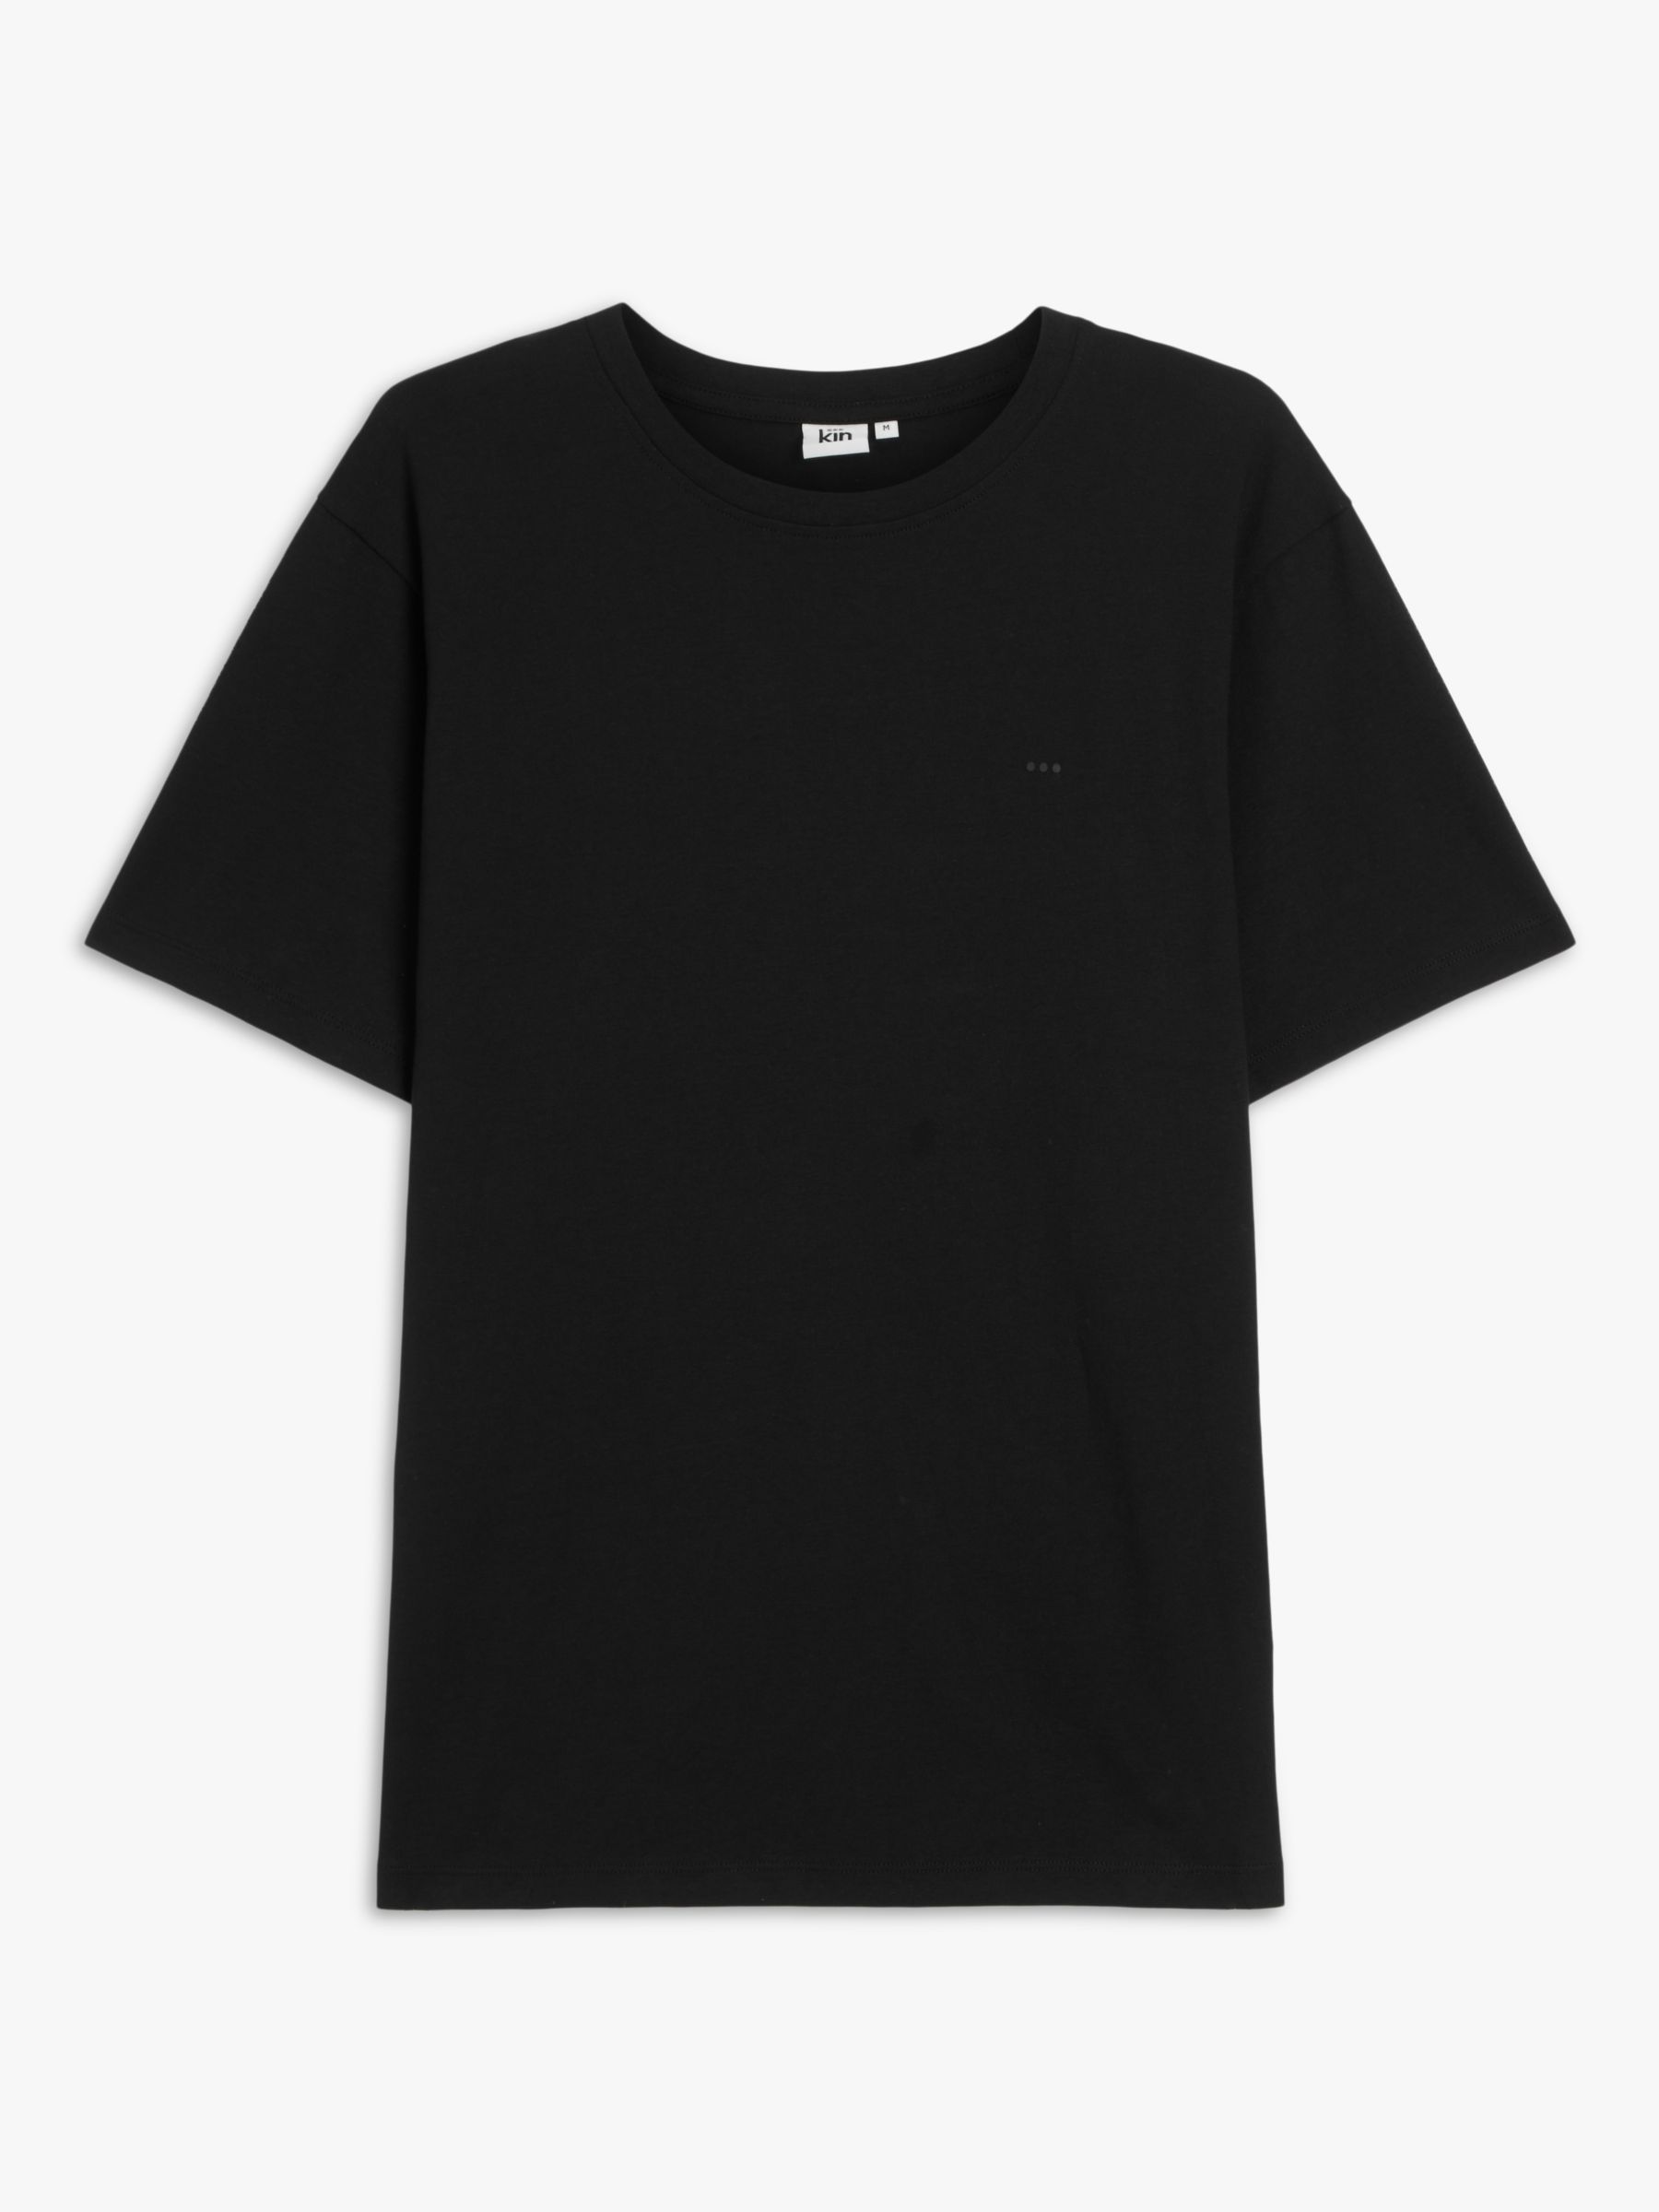 Kin Logo Cotton T-Shirt, Black Beauty, S